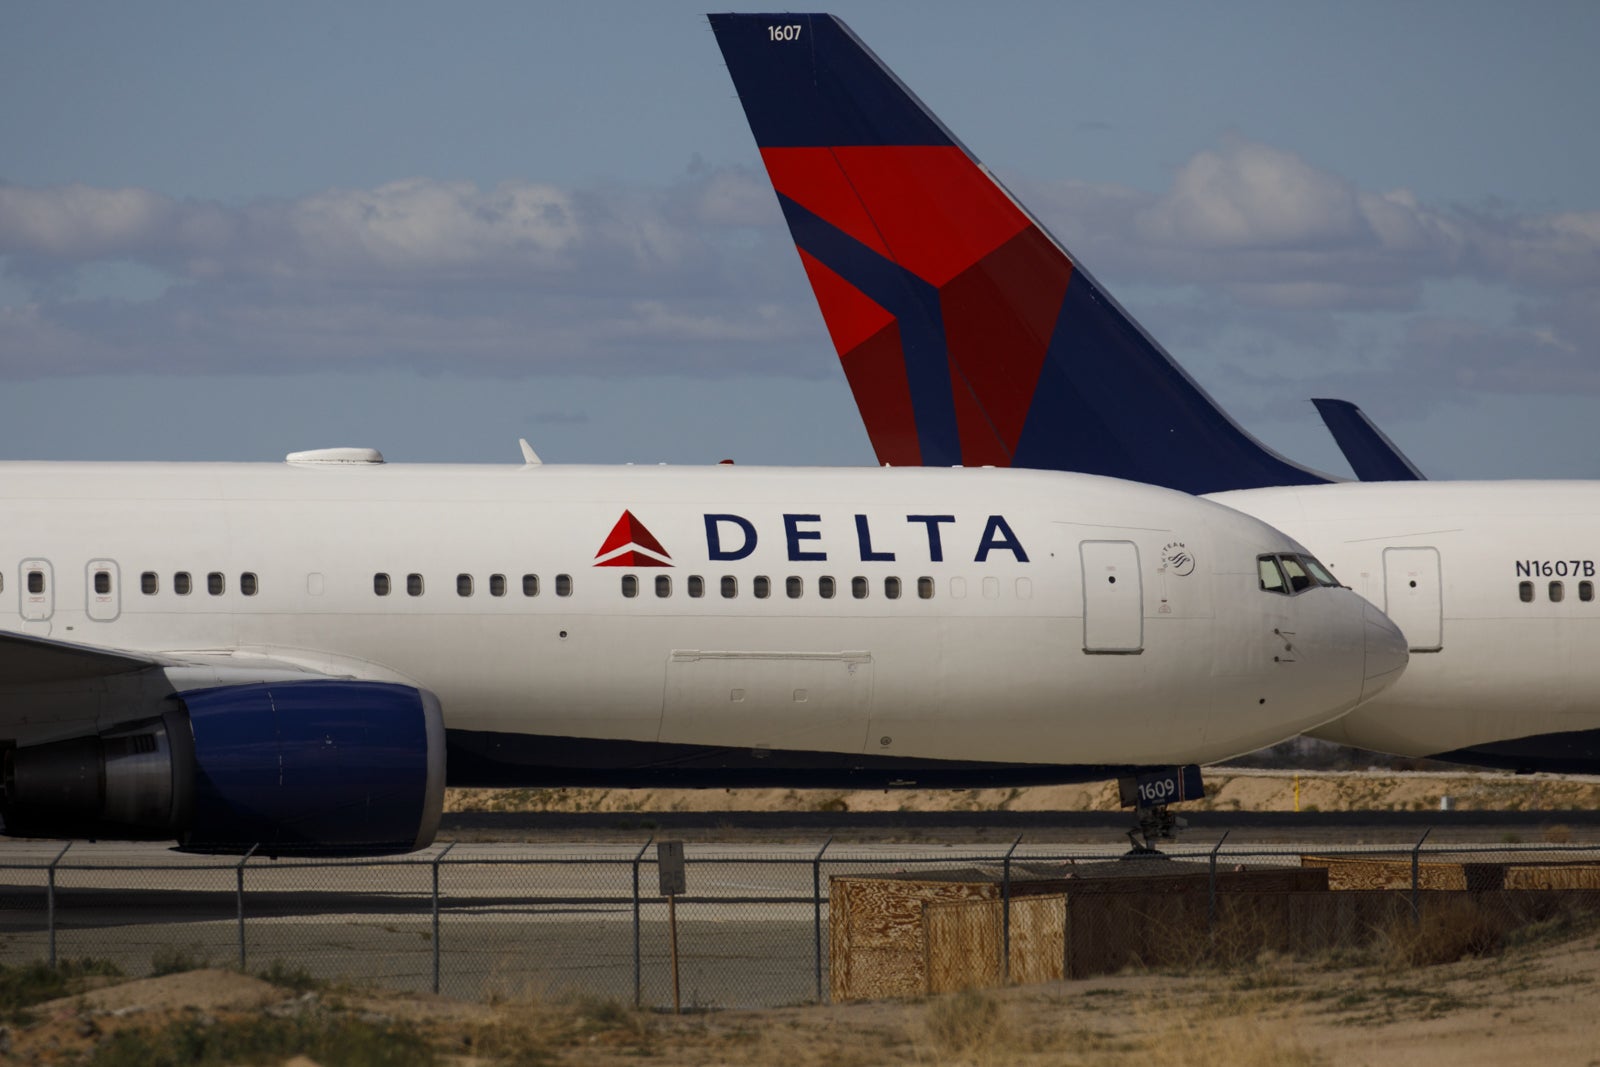 Delta To Park Half Of Fleet On $2 Billion Sales Drop